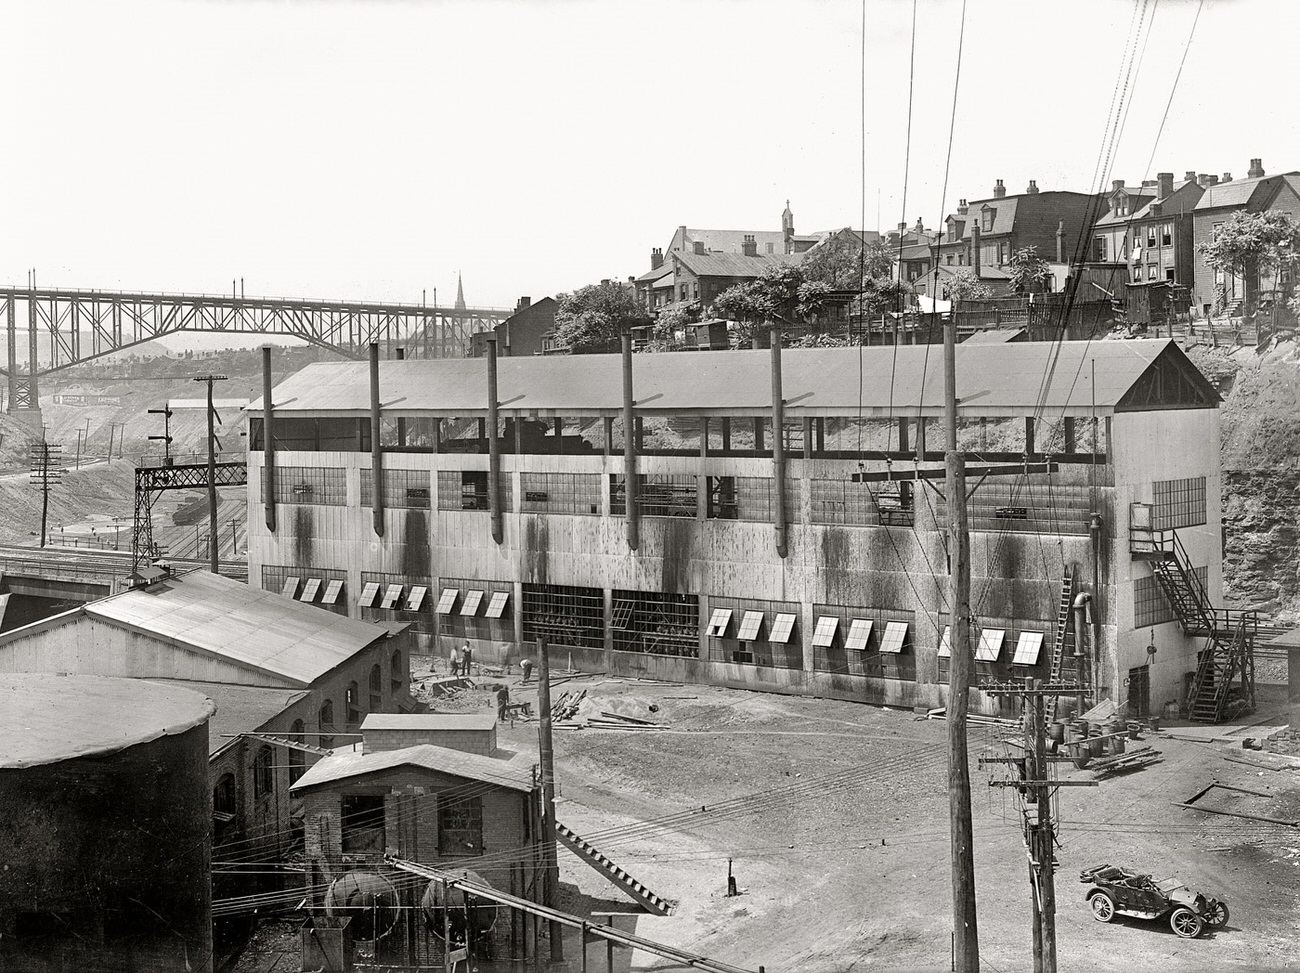 Dr. Walter F. Rittman Gasoline Plant, Pittsburgh, Pennsylvania, 1915